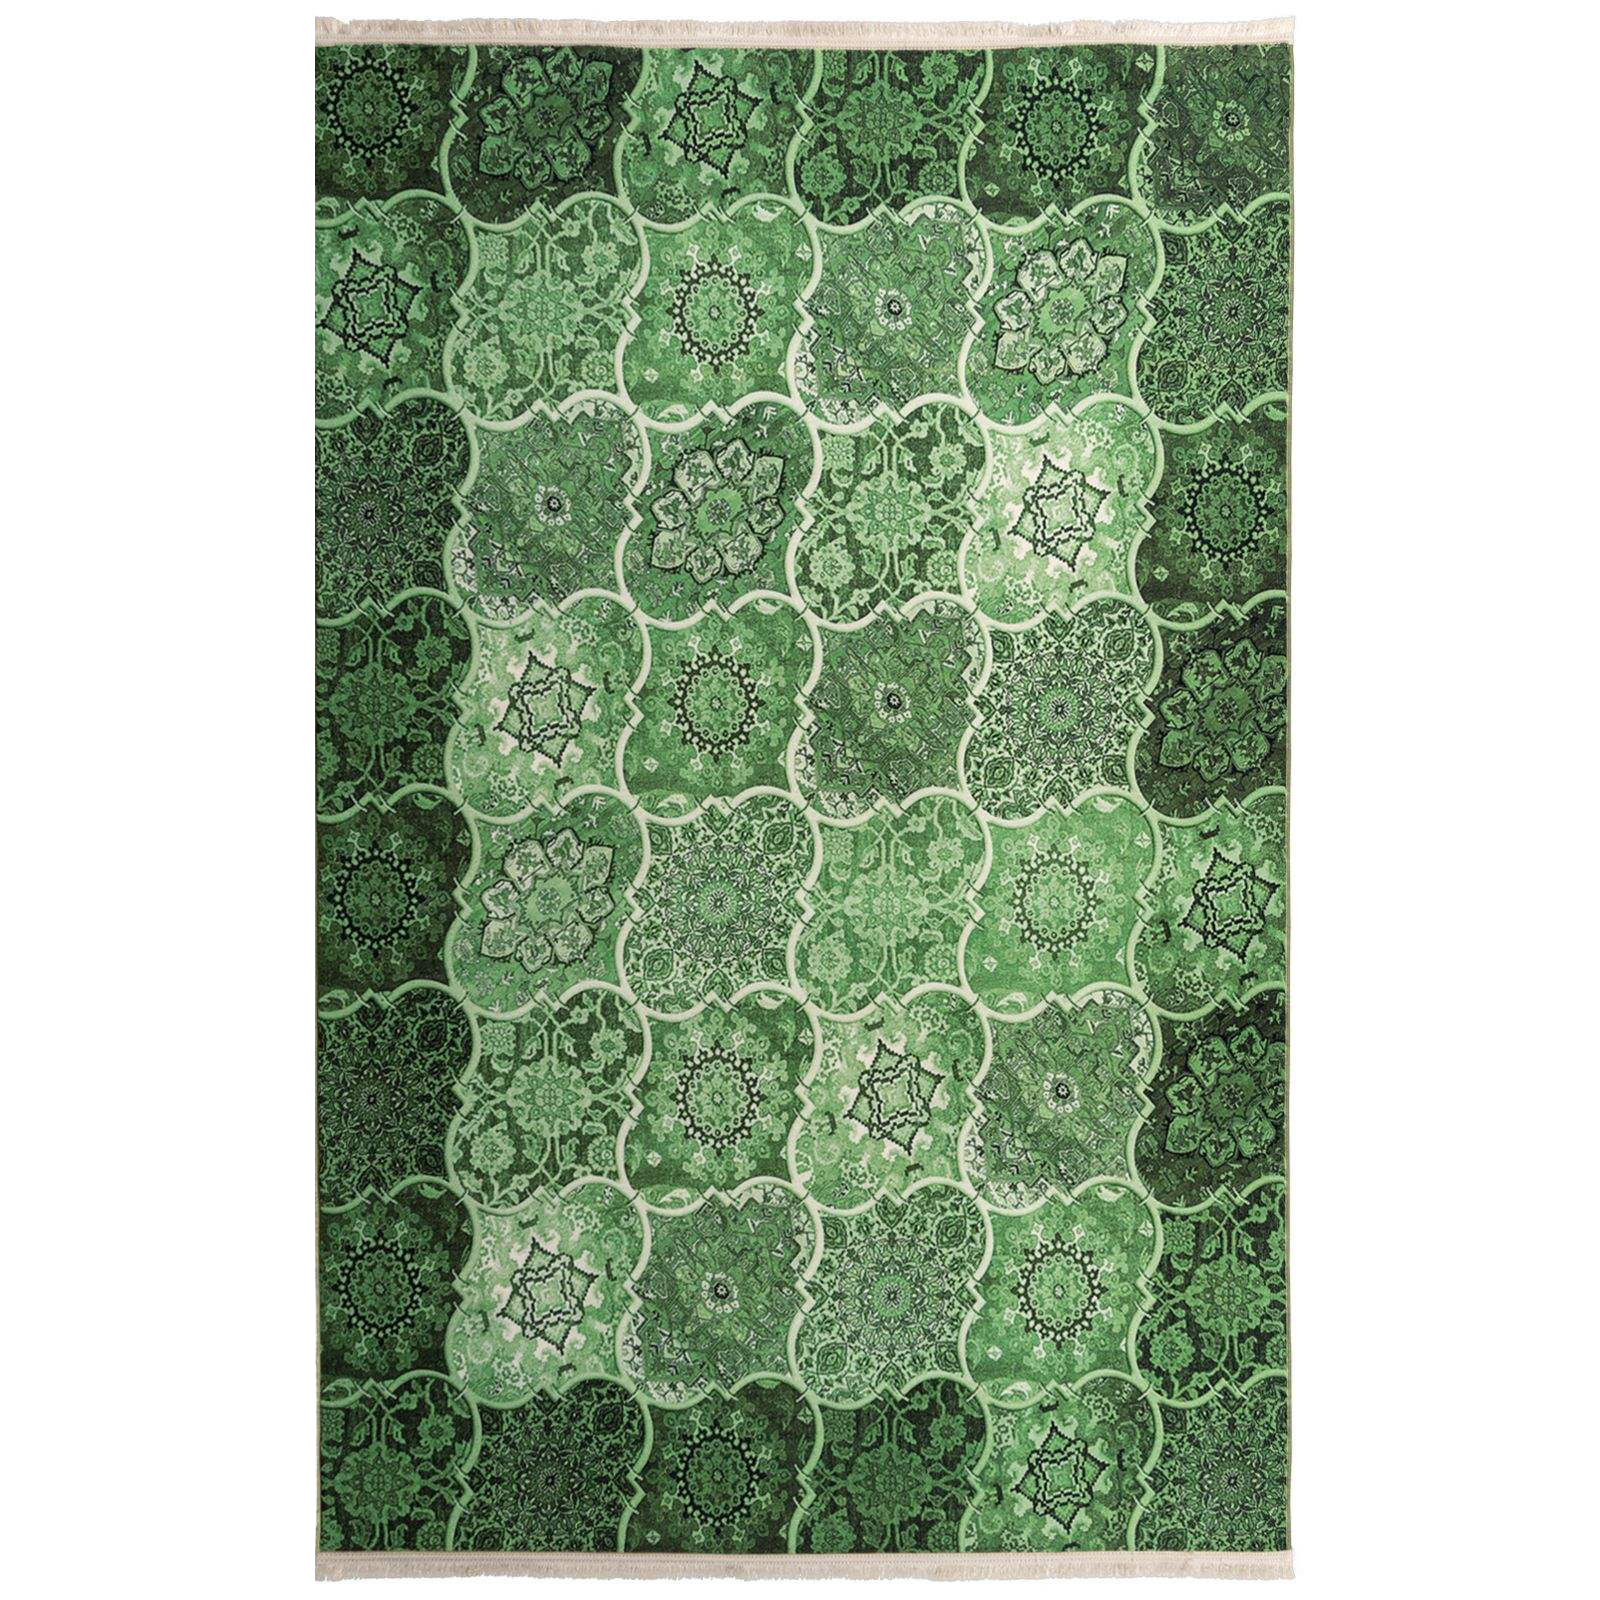 فرش ماشینی مدل چهل تکه کد 100507 زمینه سبز